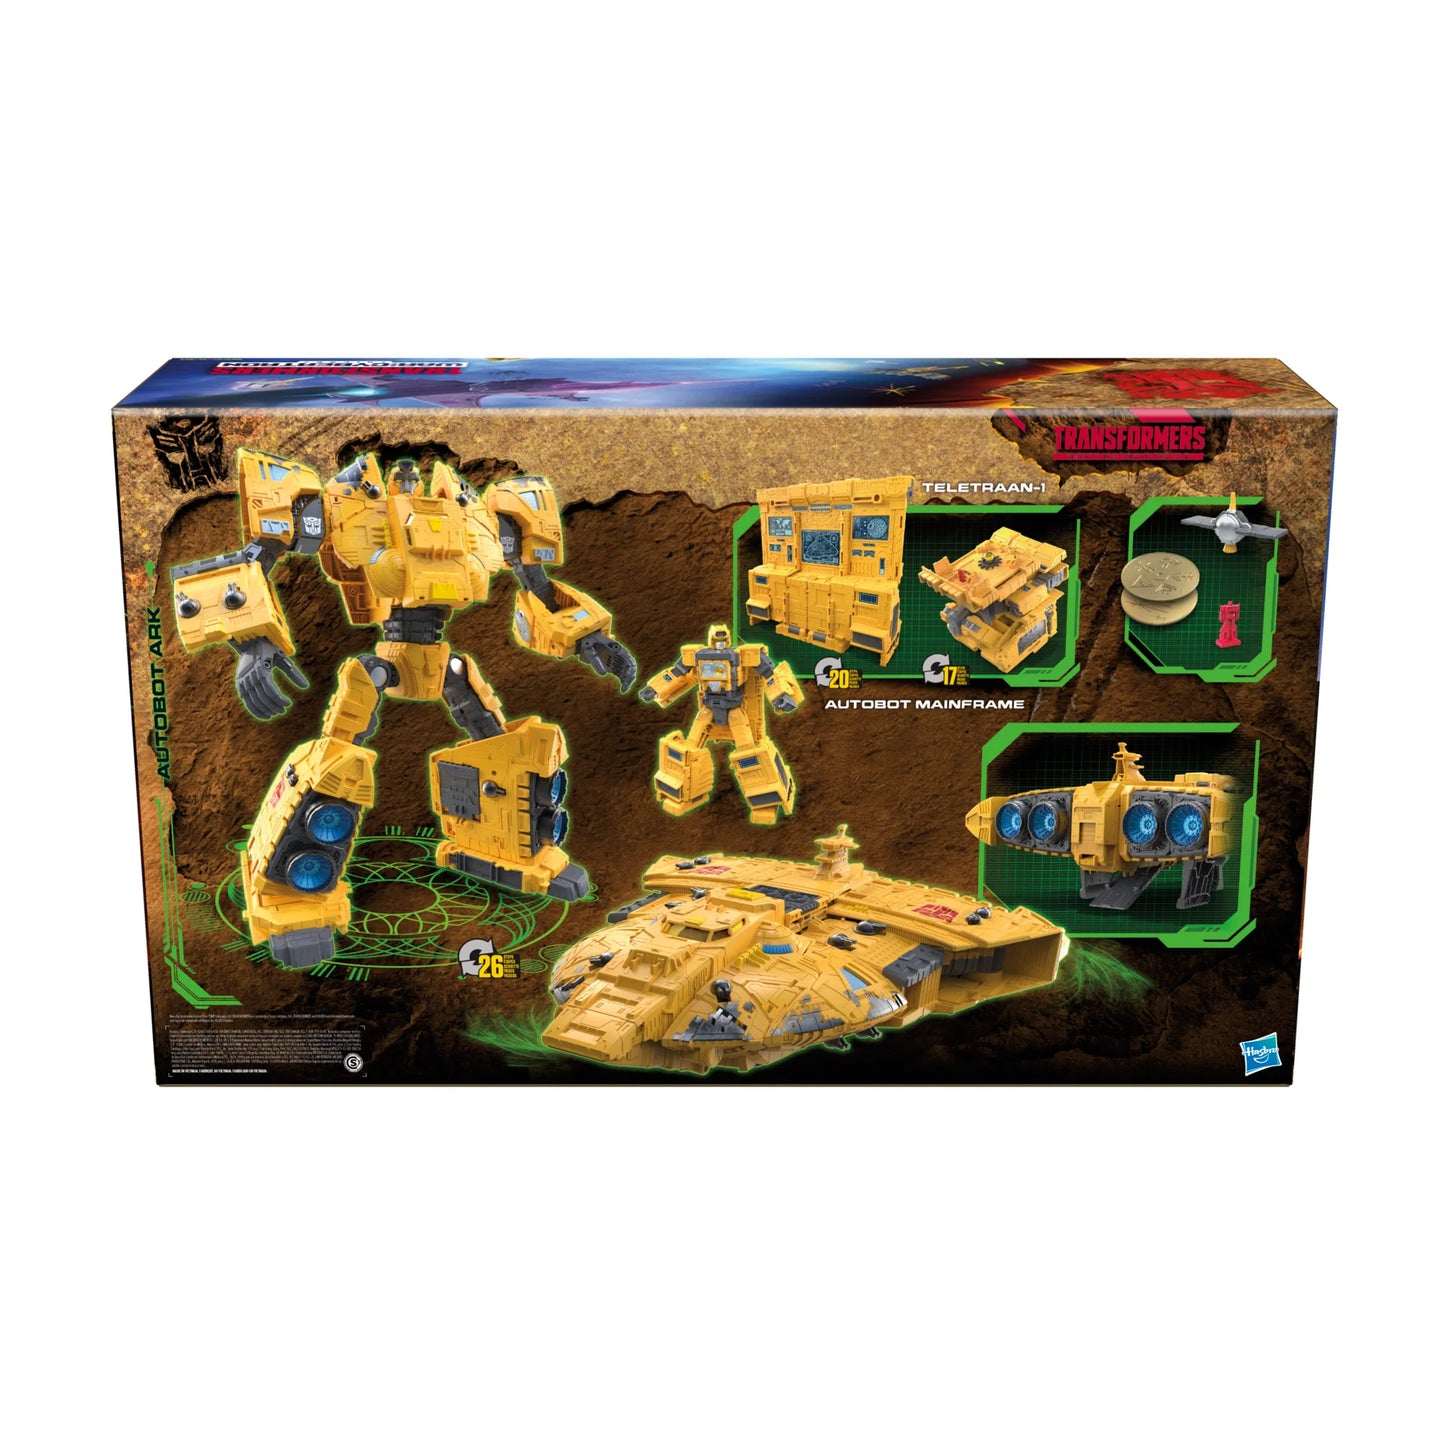 Transformers - War for Cybertron: Kingdom Titan WFC-K30 Autobot Ark